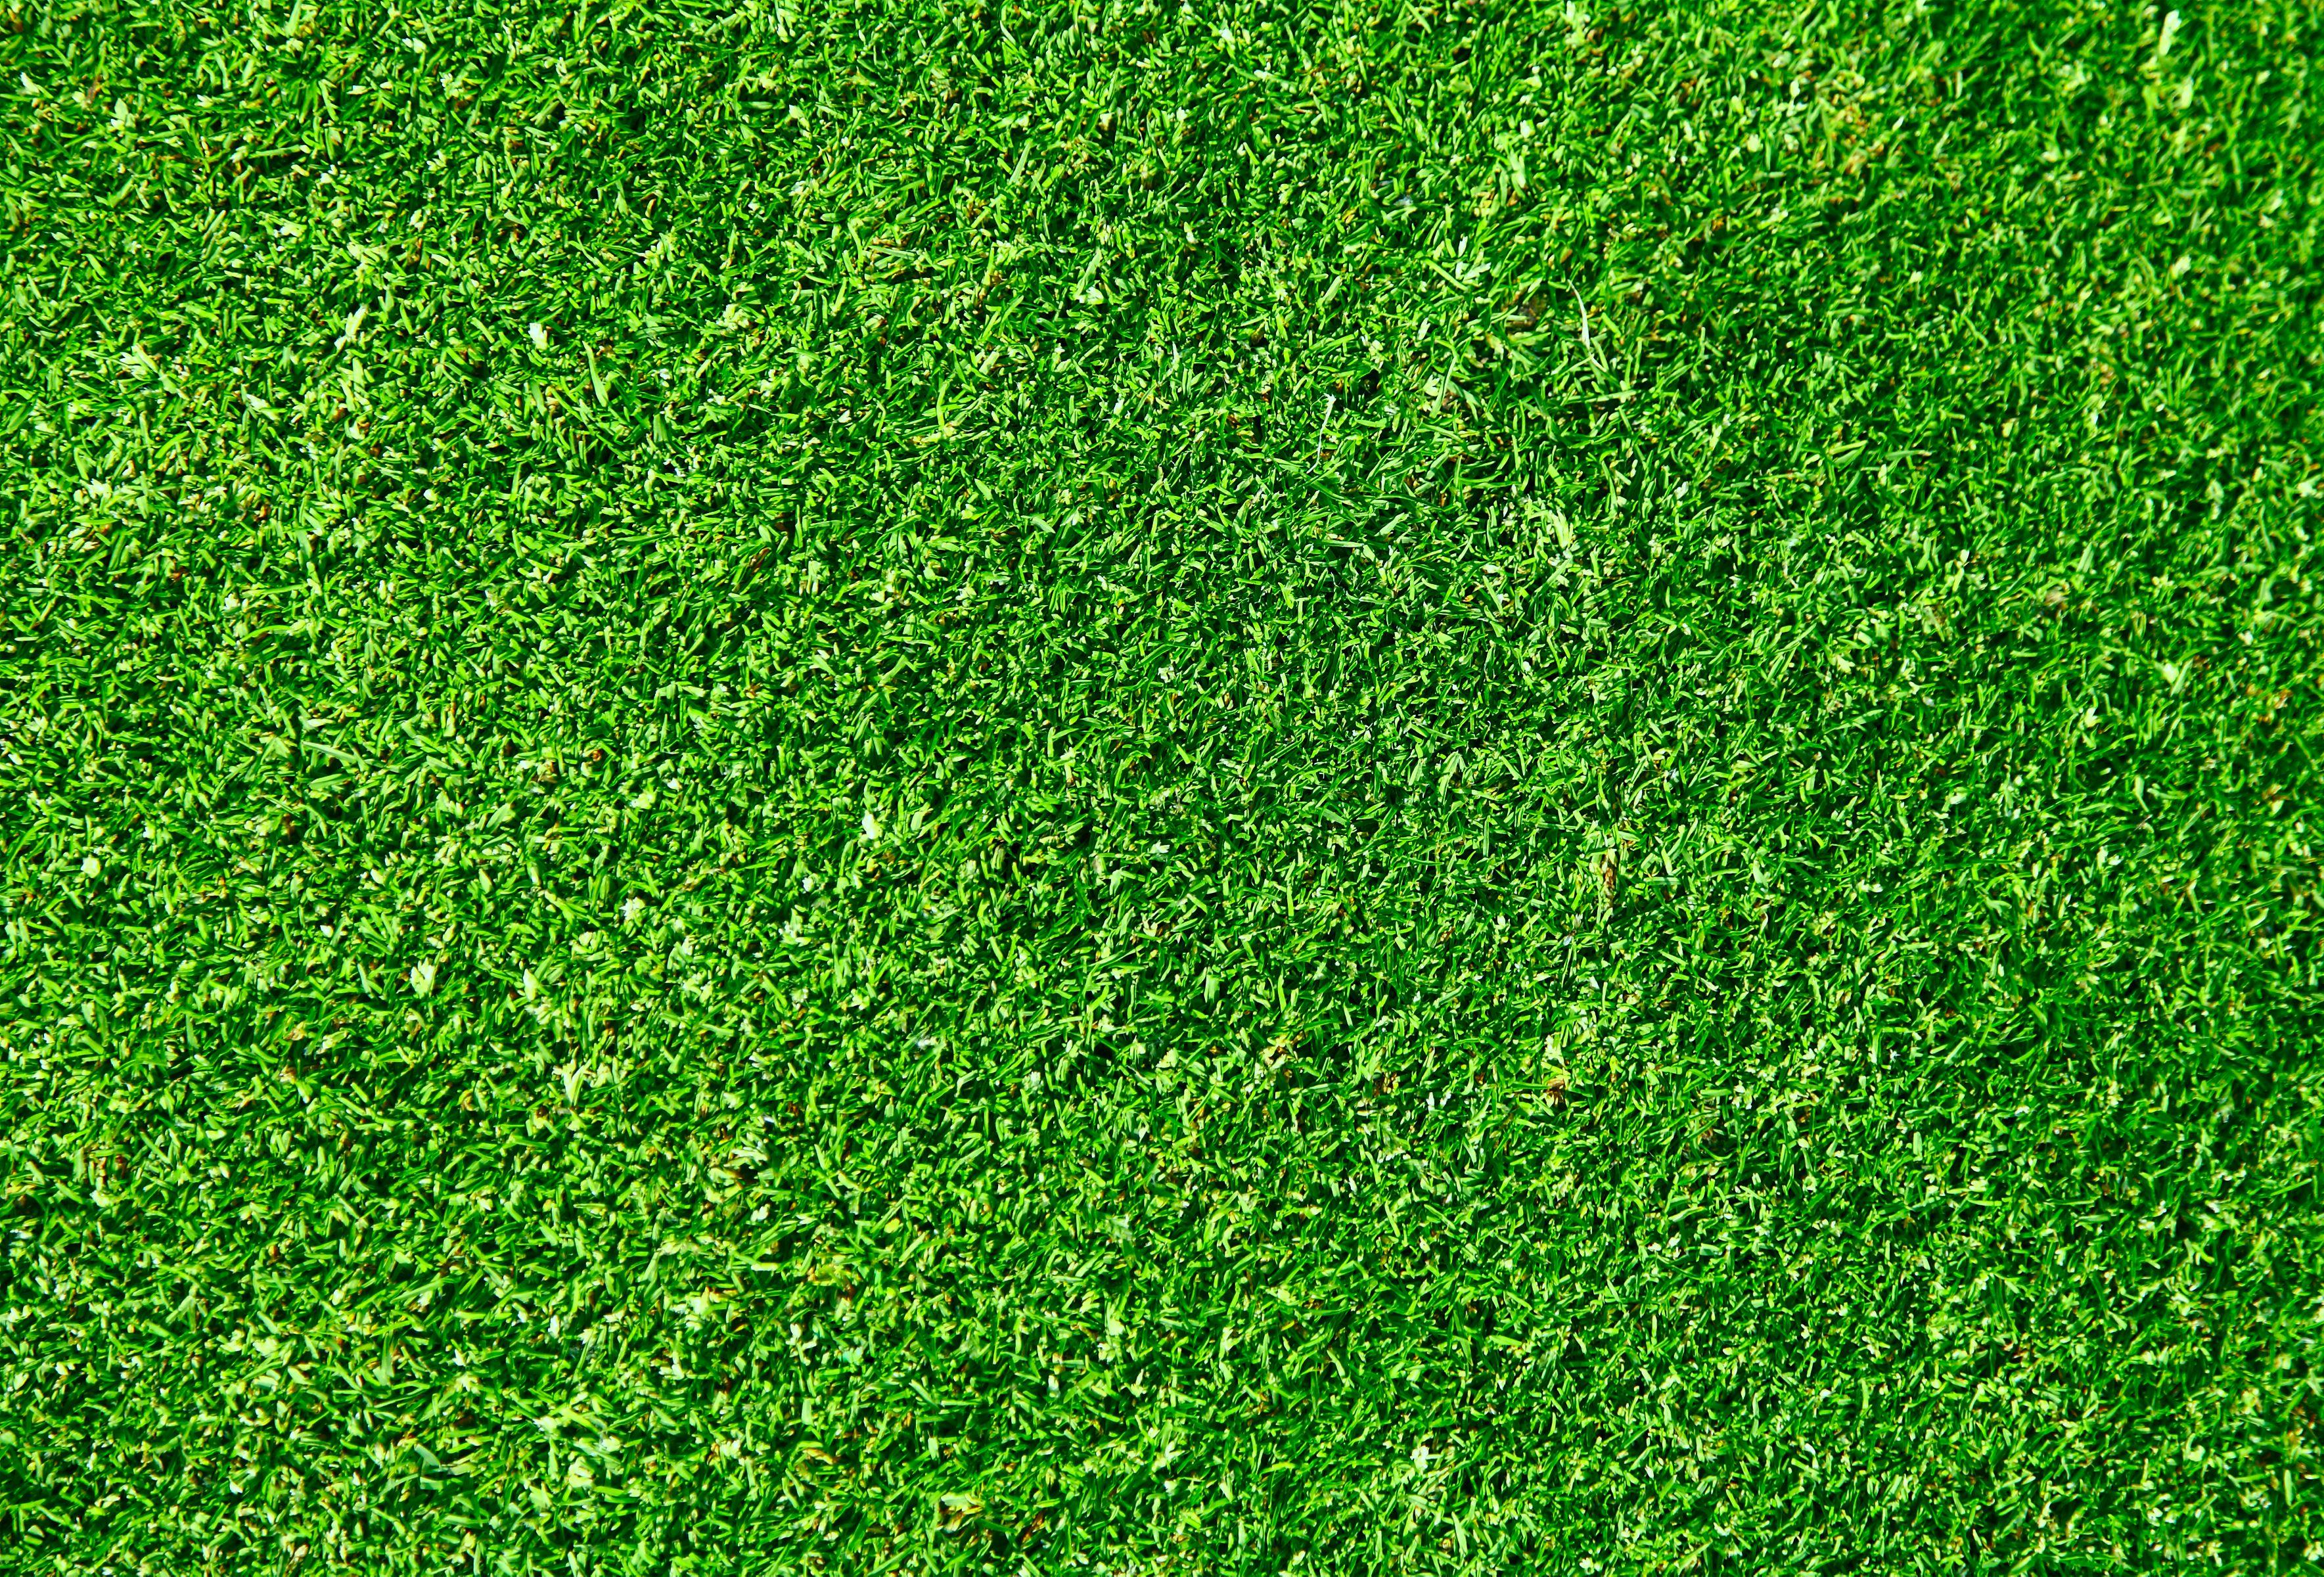 Green Grass Texture Wallpaper Picture with HD Deskx2400 px